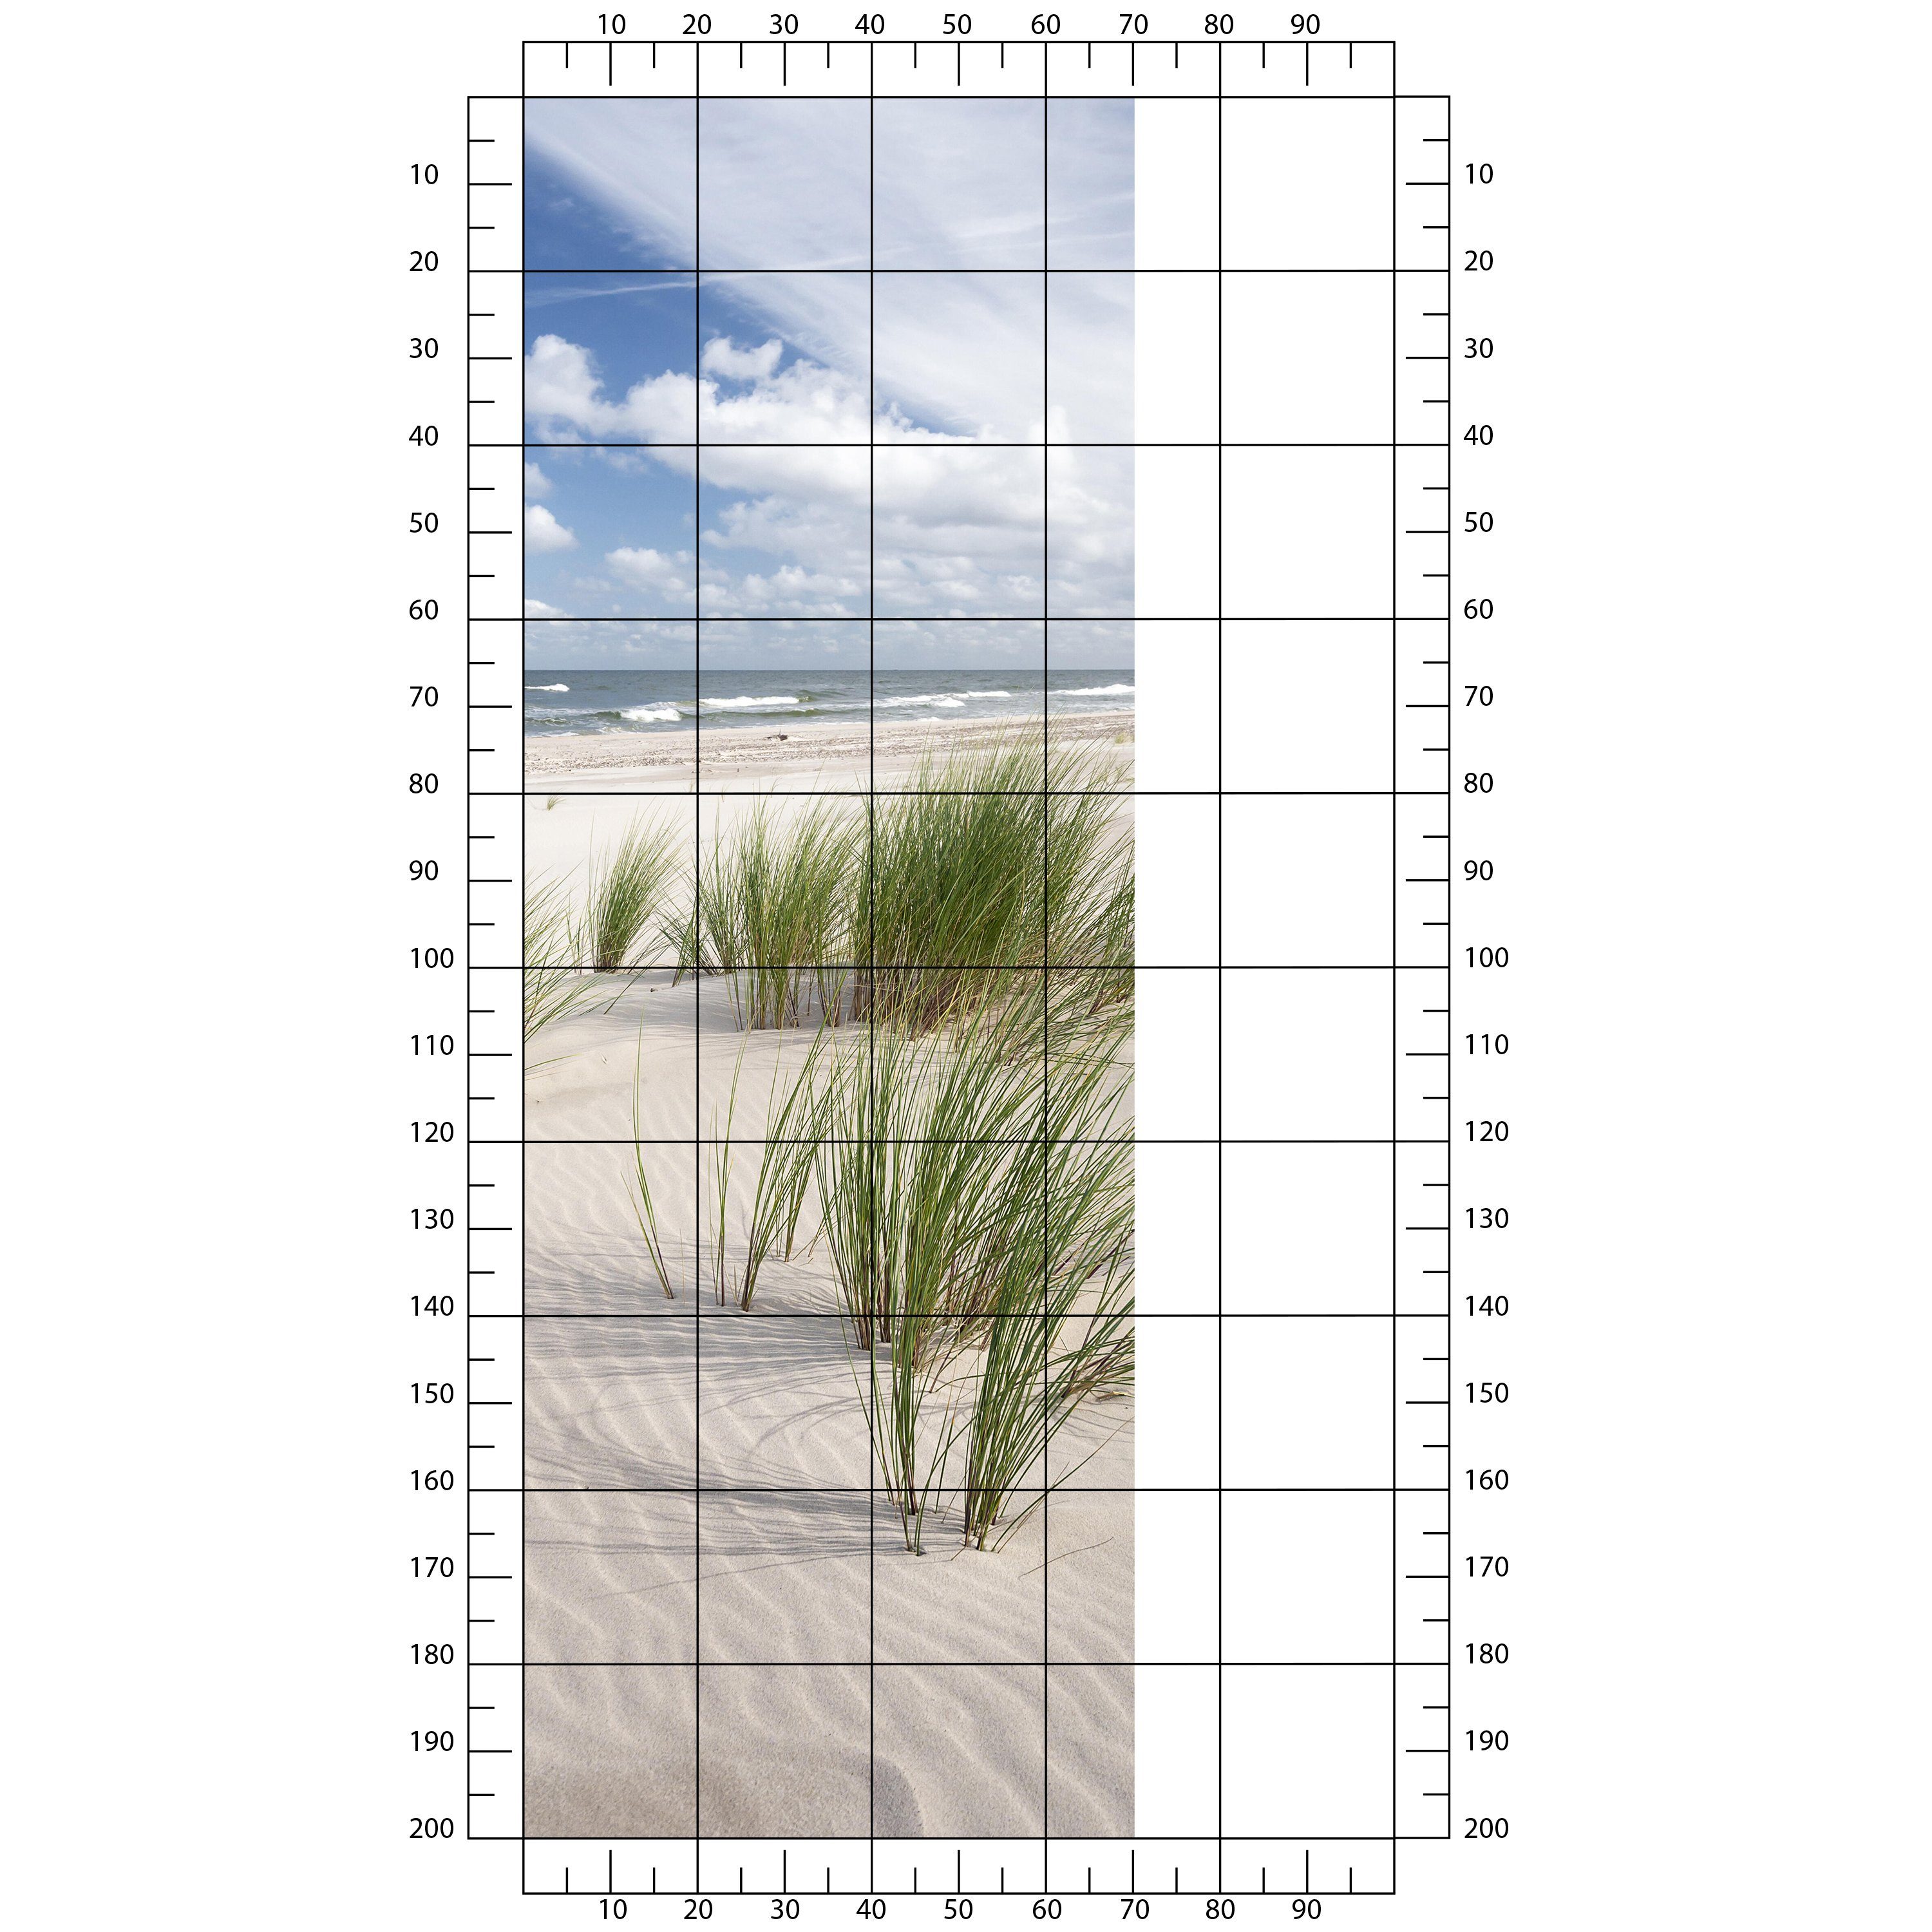 wandmotiv24 Türtapete Gräser am Sand-strand, Meer, Fototapete, glatt, selbstklebende matt, Wandtapete, Motivtapete, Wasser, Dekorfolie